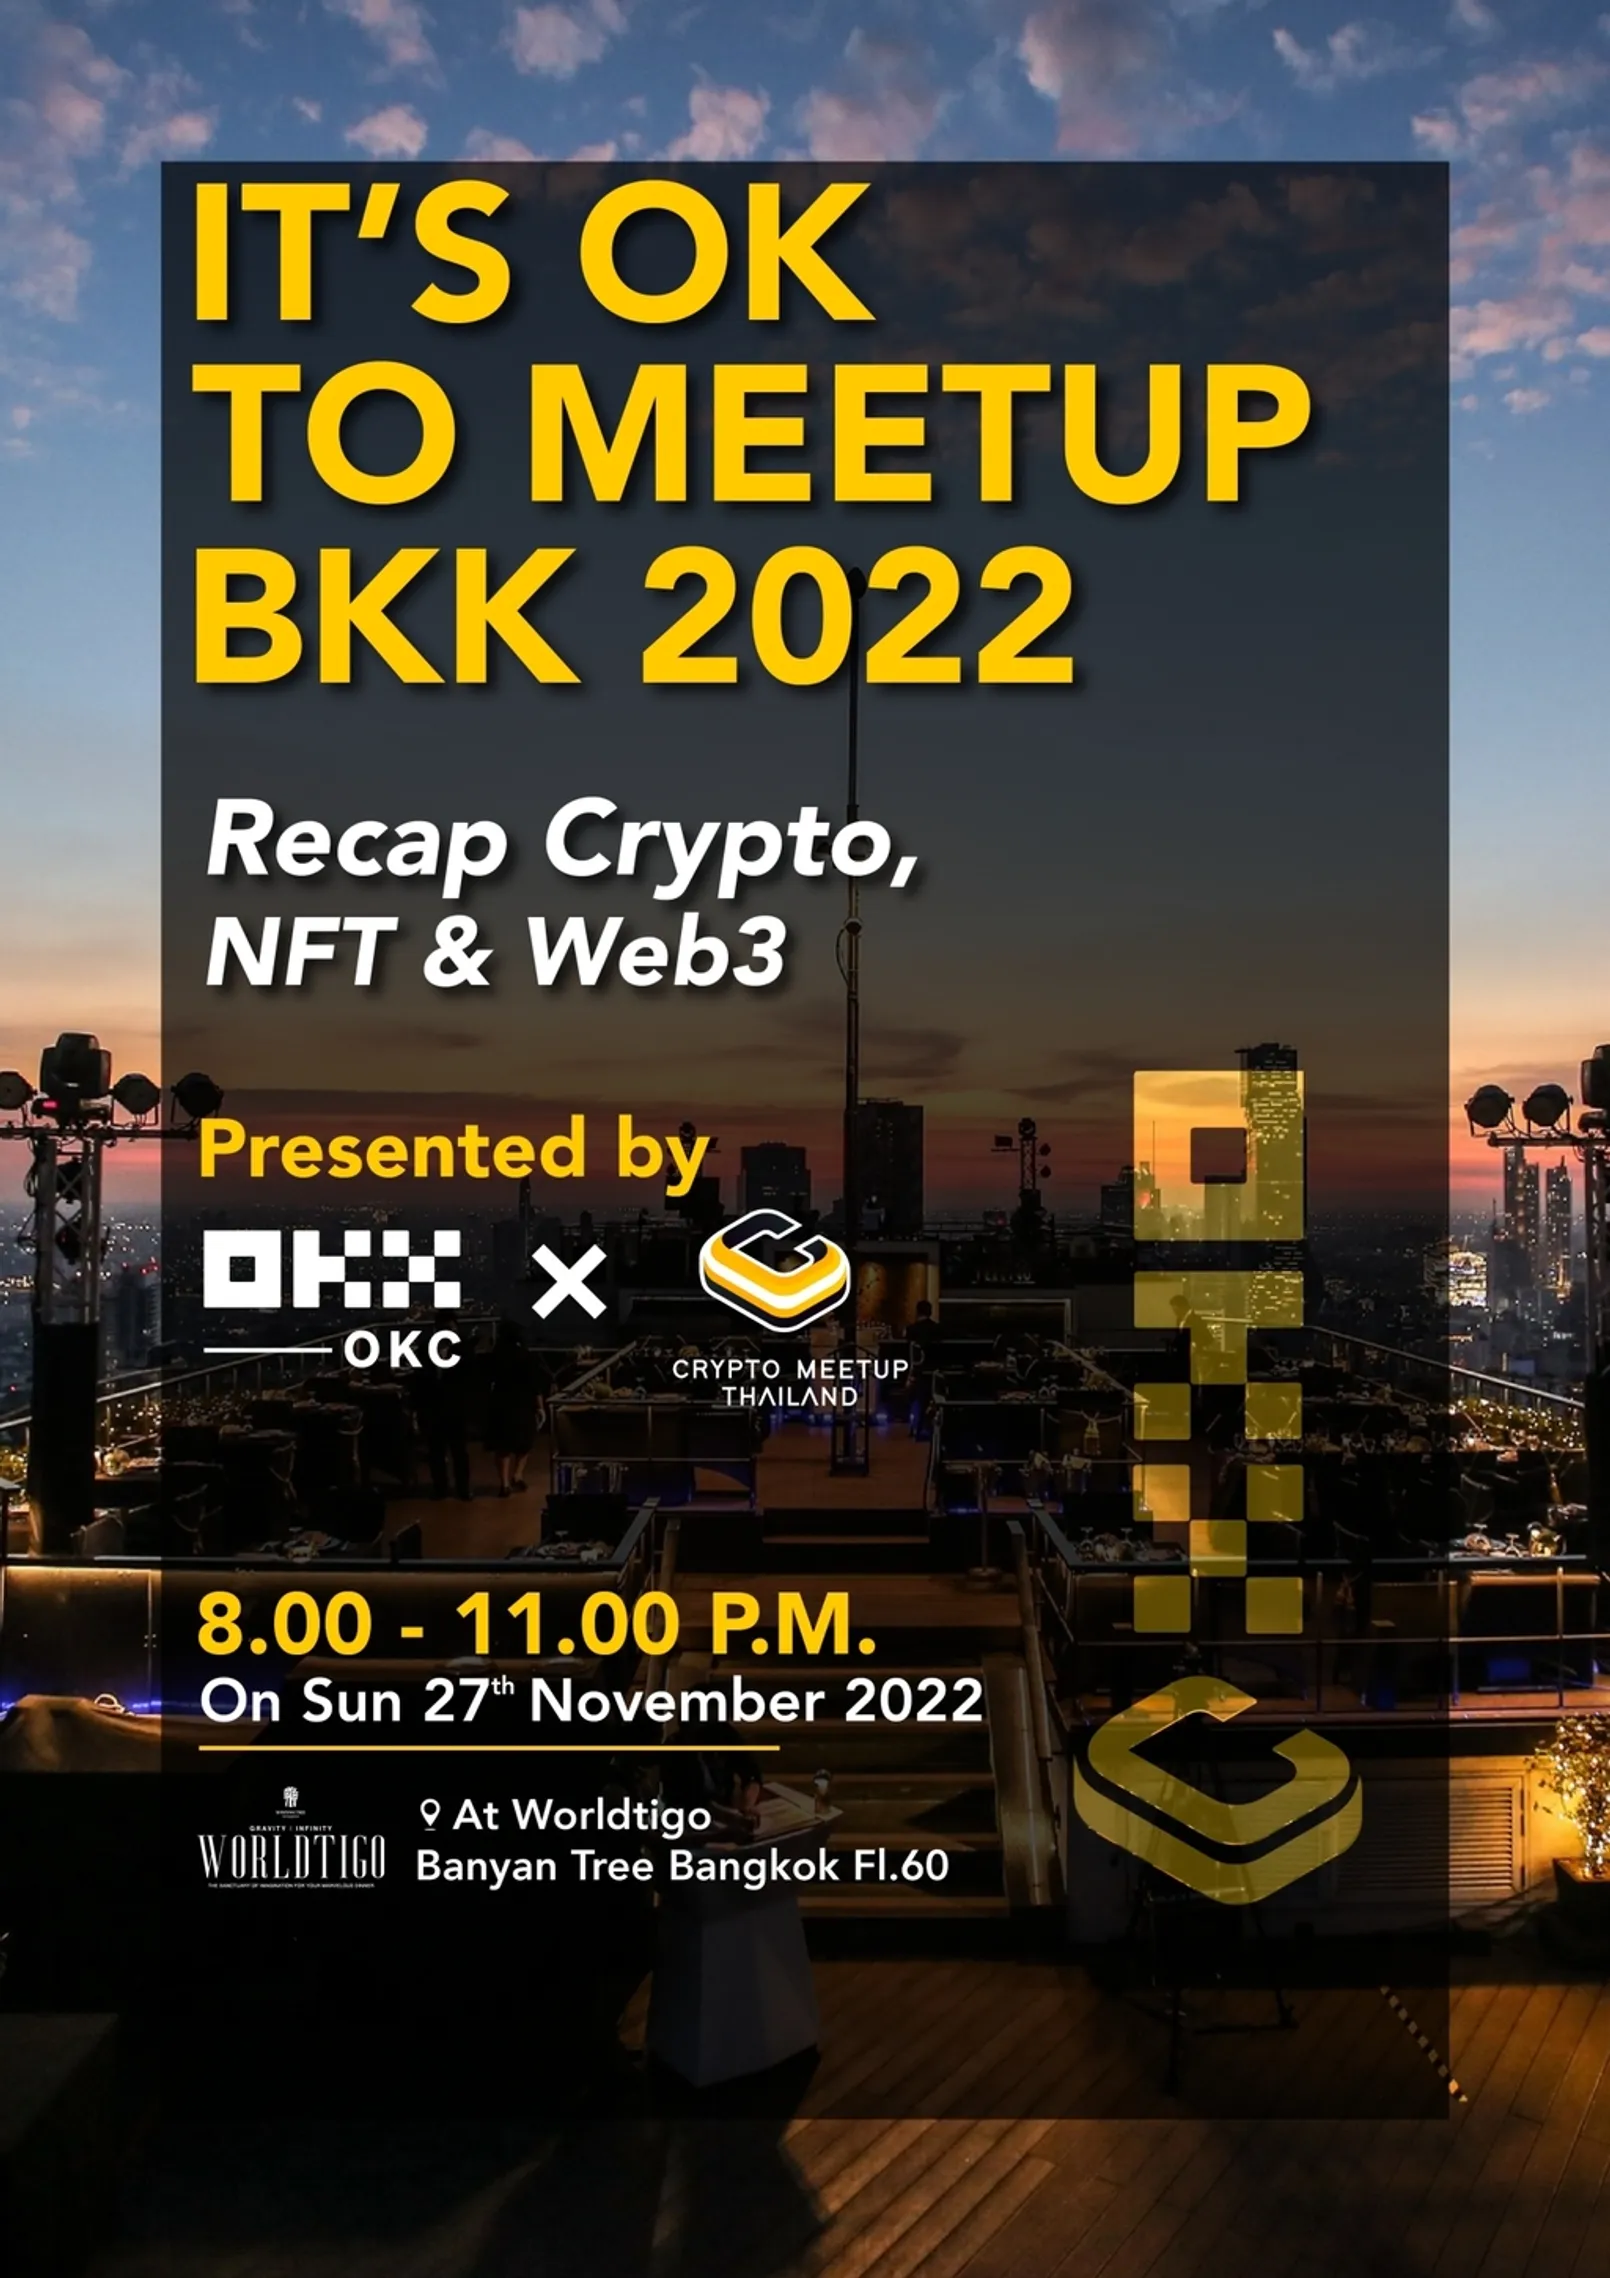 IT'S OK TO MEETUP - BKK 2022 presented by OKX Chain X Crypto Meetup Thailand